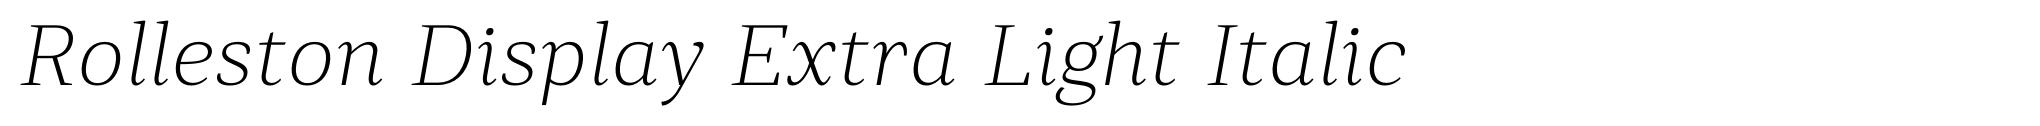 Rolleston Display Extra Light Italic image